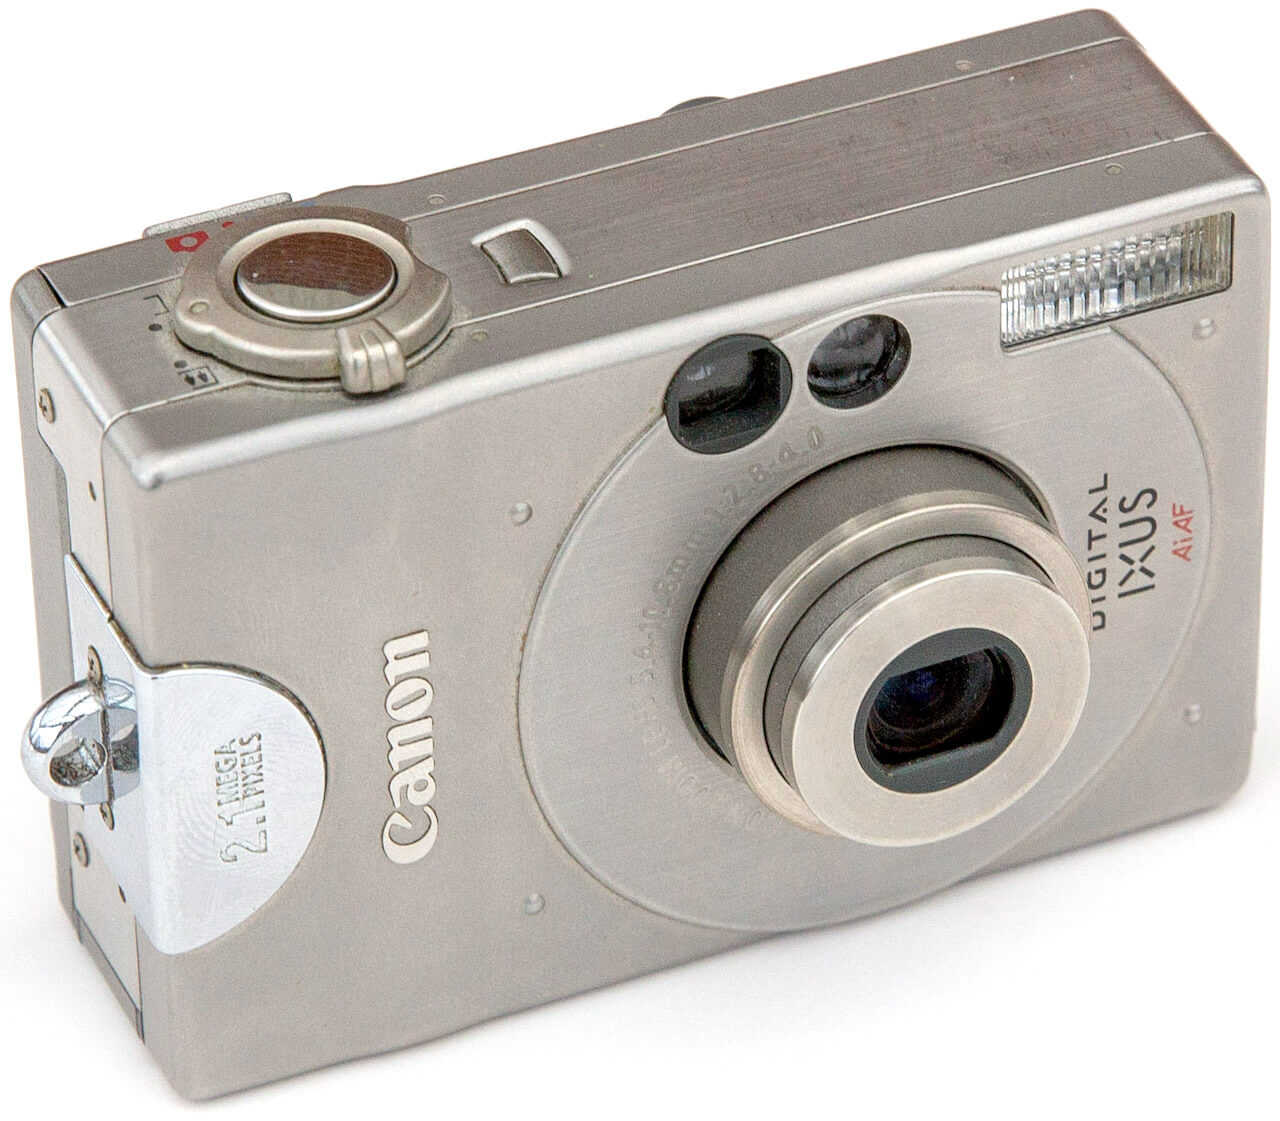 My first digital camera, the Canon Digital Ixus. (137-114)